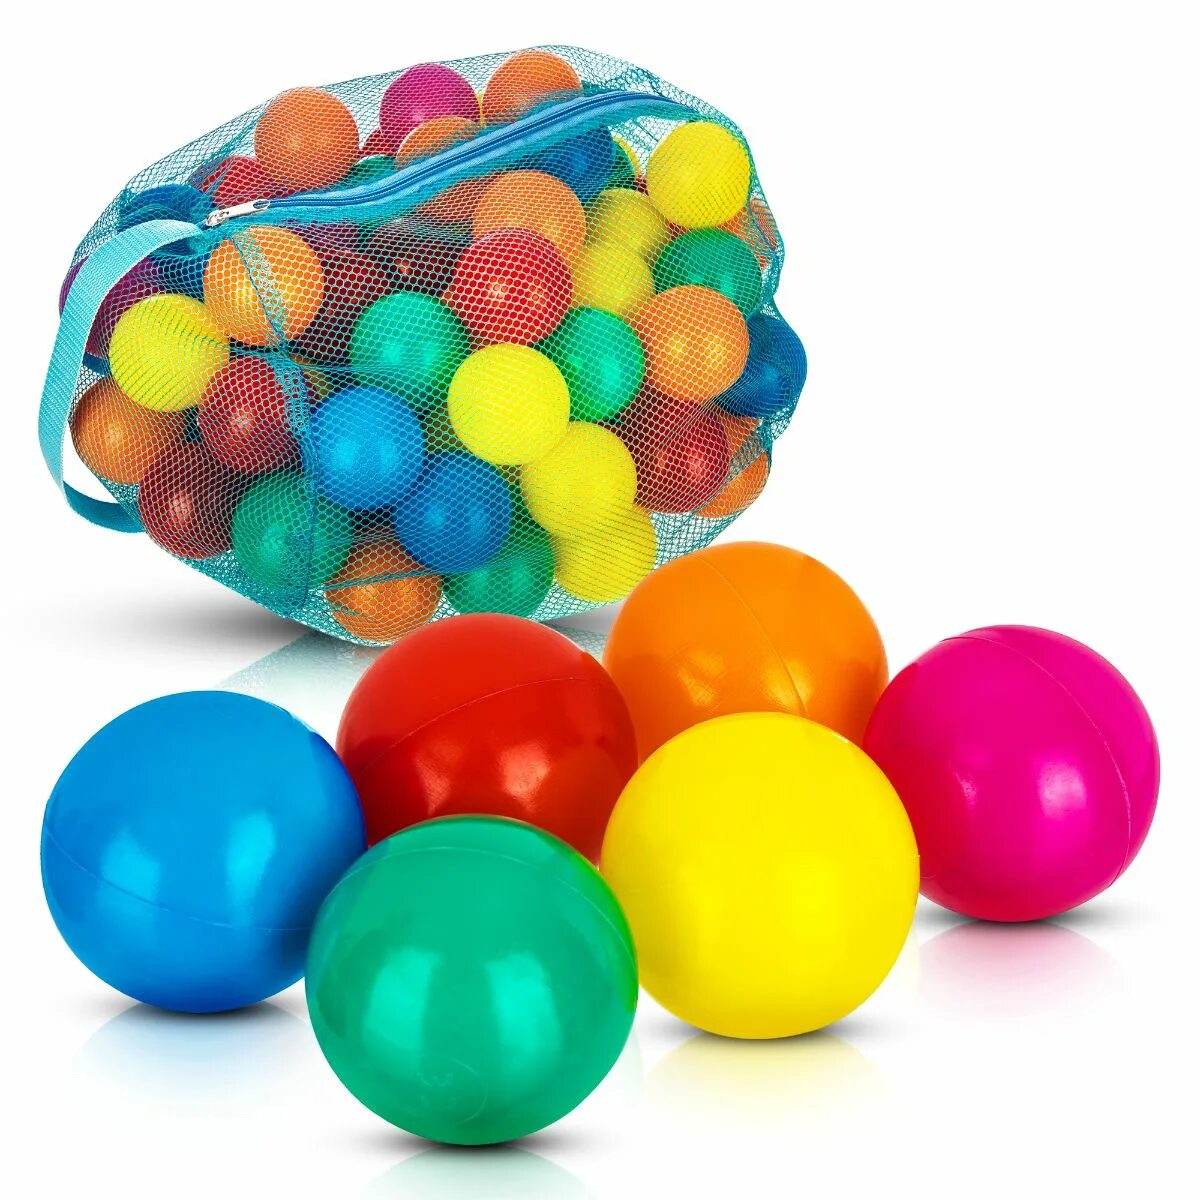 Шаре плей. Ball Pit balls. Цветное ассорти шаров на 3 года. Plastic balls. Soft Foam balls for Kid Pool.